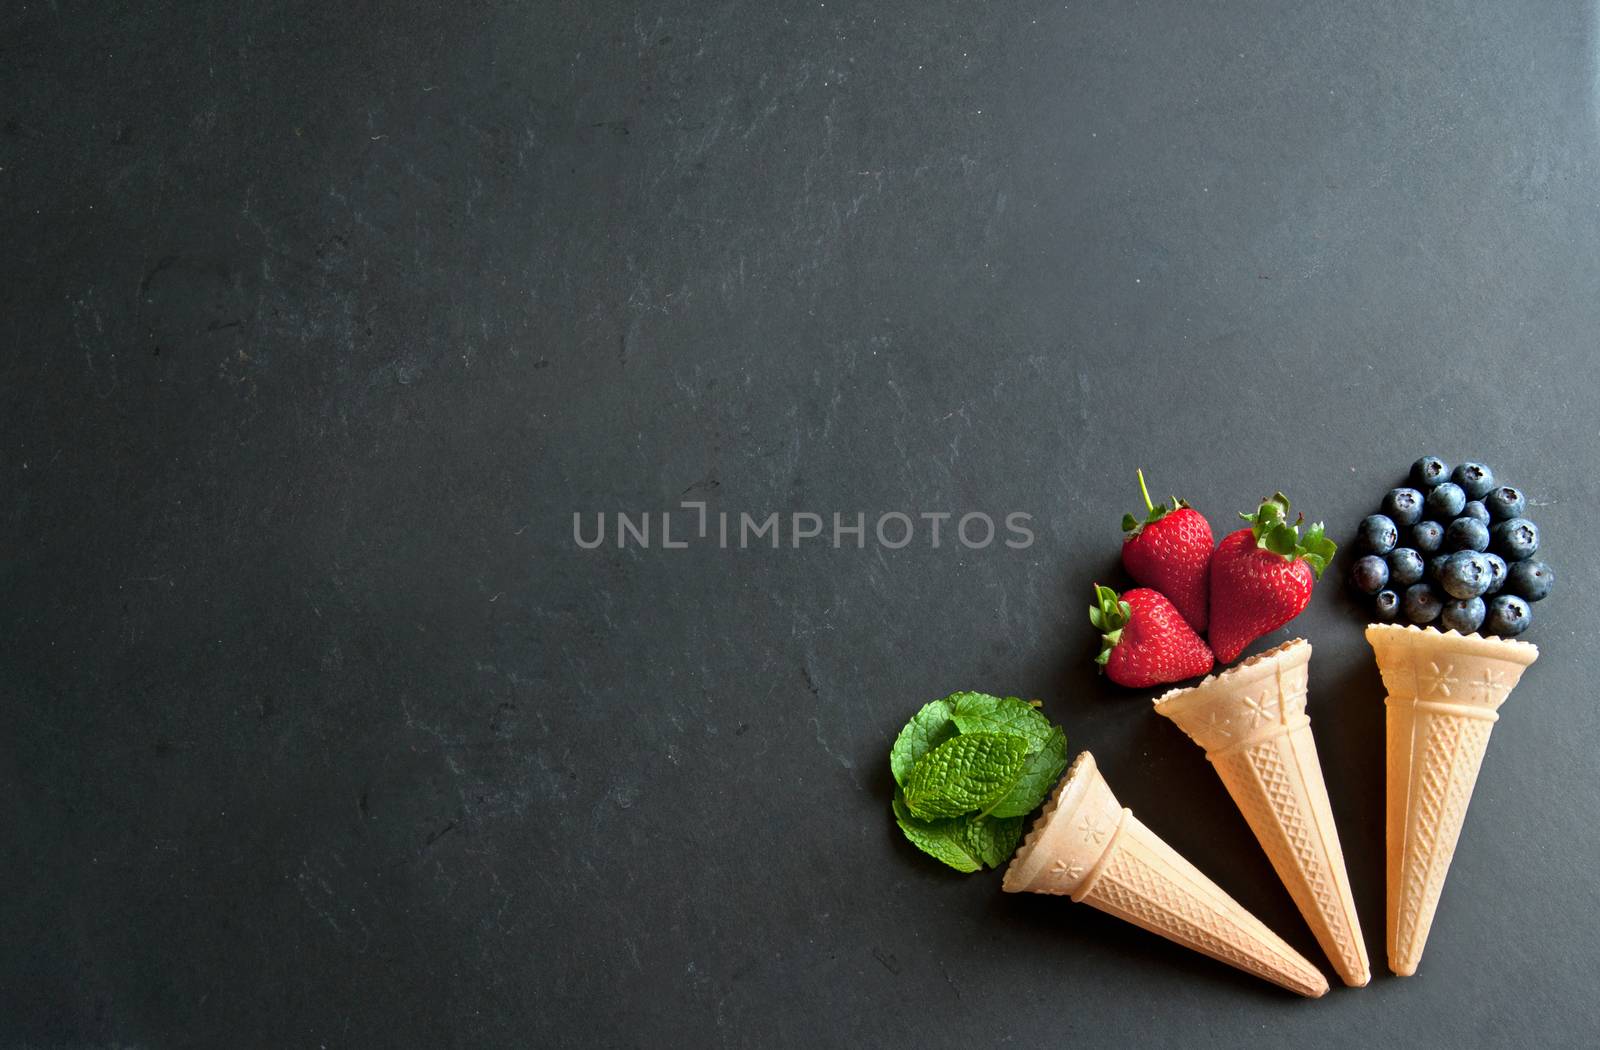 Three natural icecream cones by unikpix